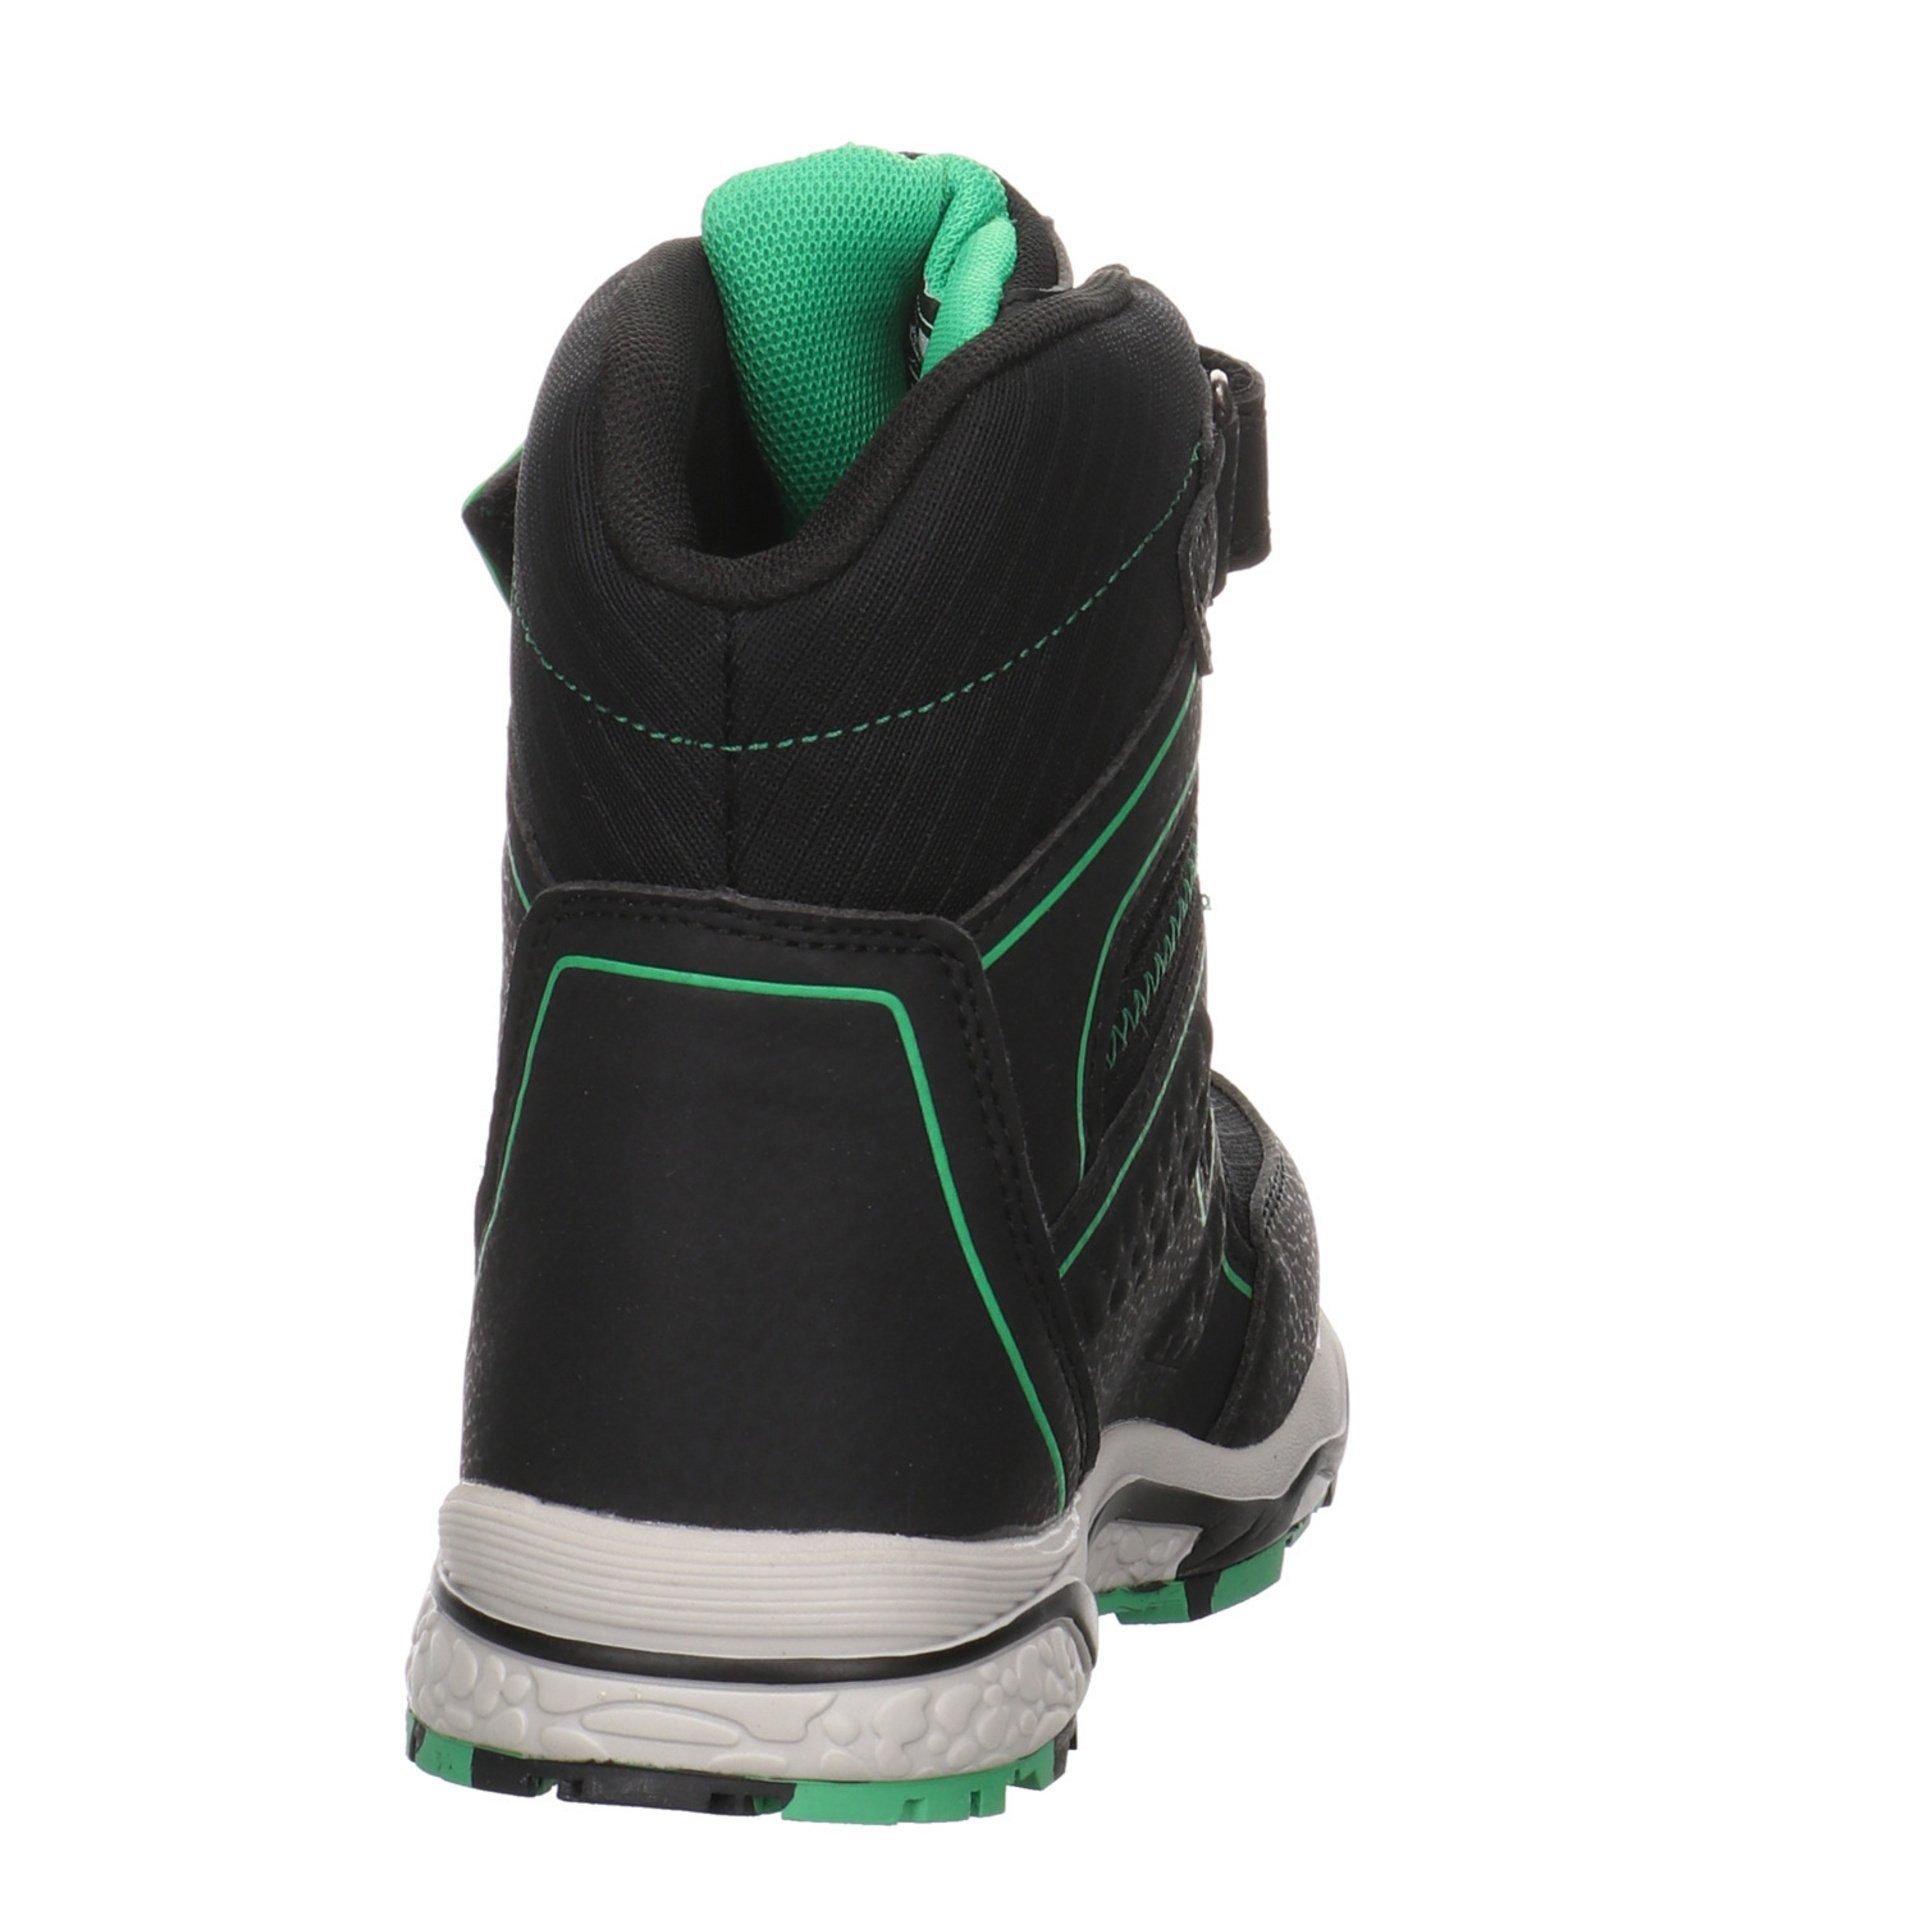 Schuhe Jungen Stiefel Stiefel Lucian-Tex Lurchi Boots Synthetikkombination green YK-ID by black